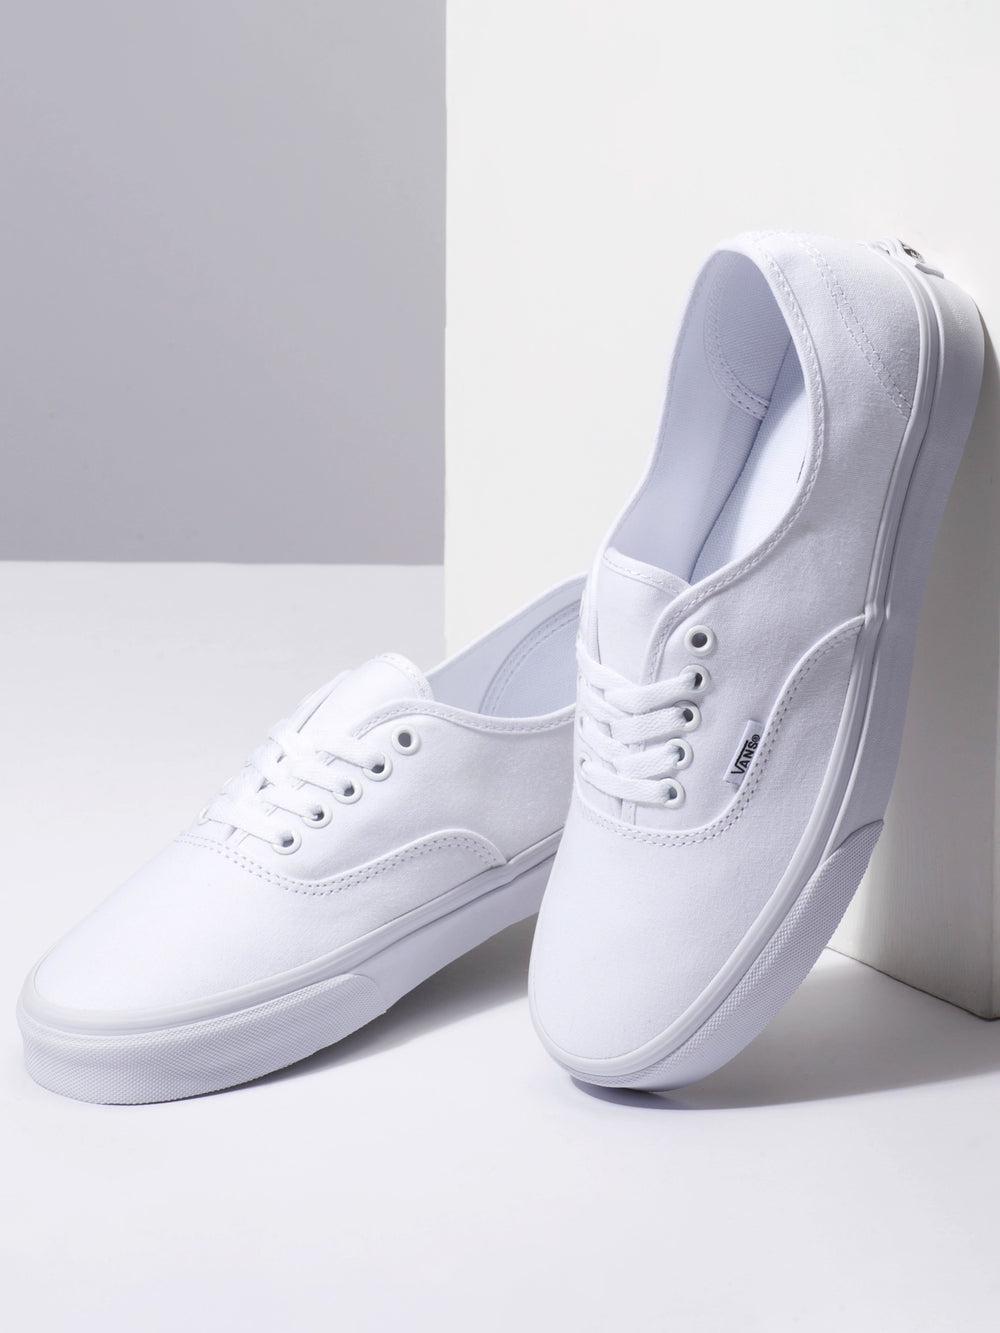 Vans Doheny Sneaker - Men's | Sneakers men, Mens white vans, Vans